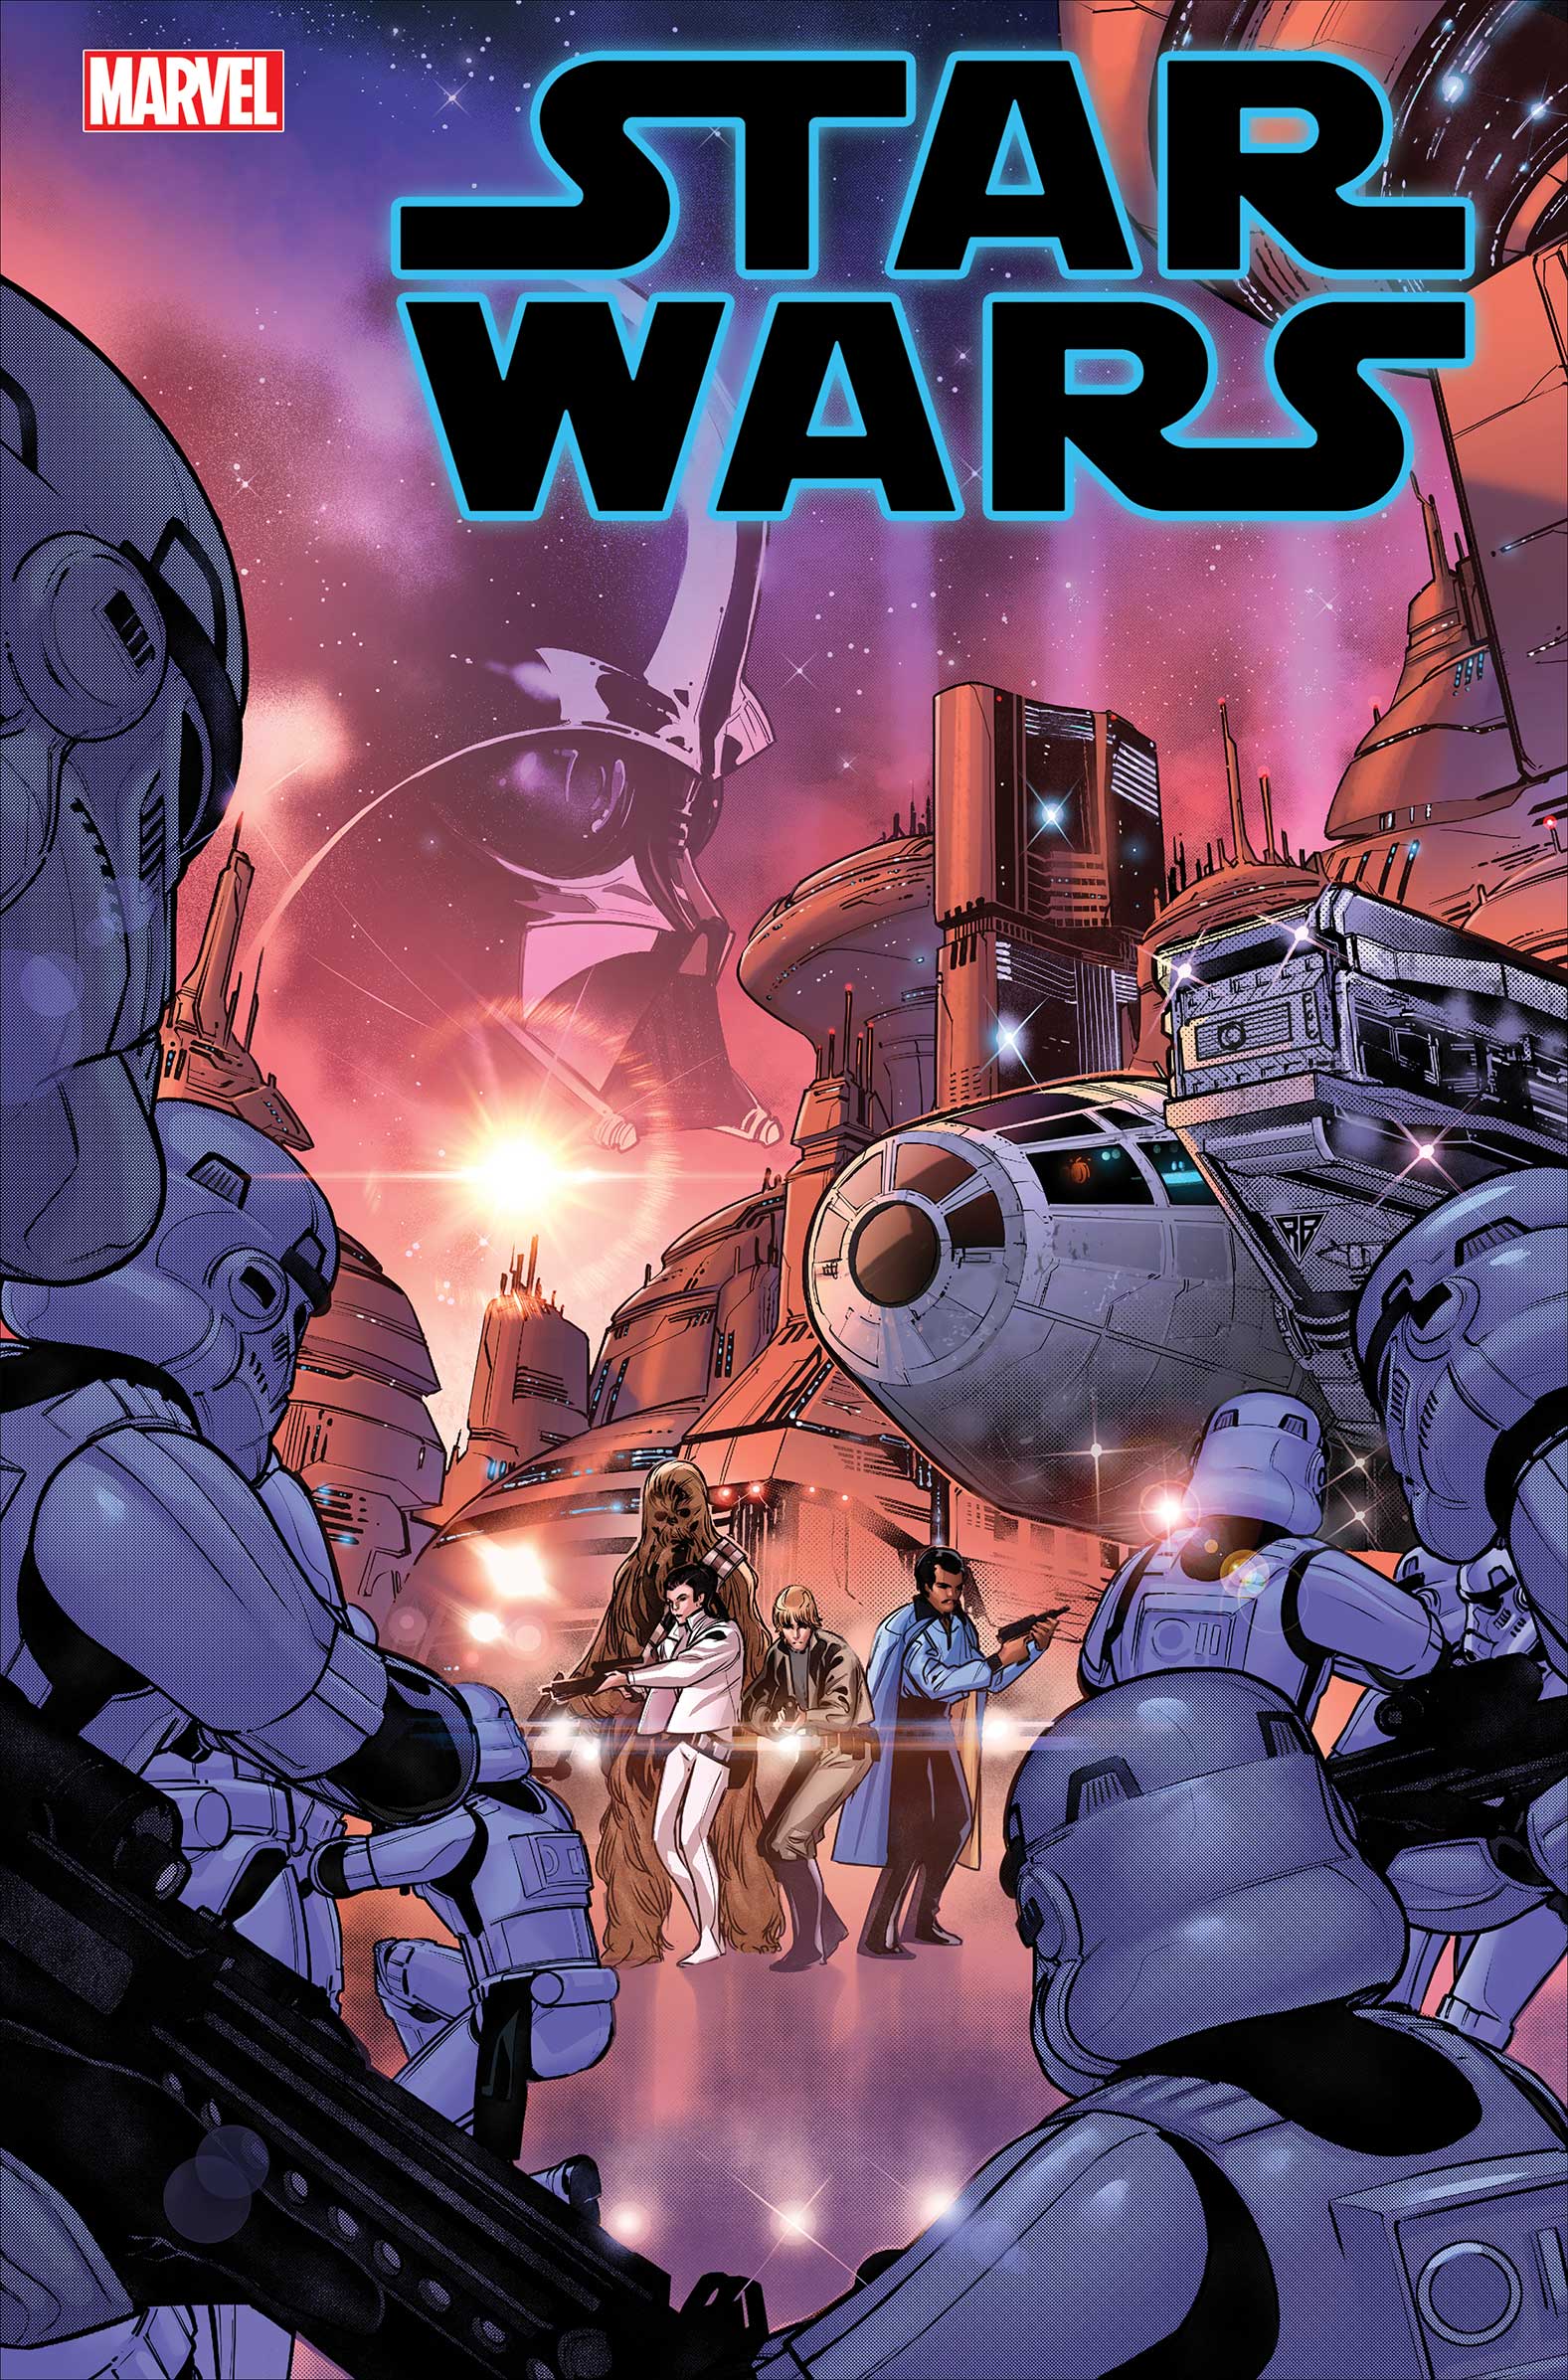 Star Wars (2020) #3